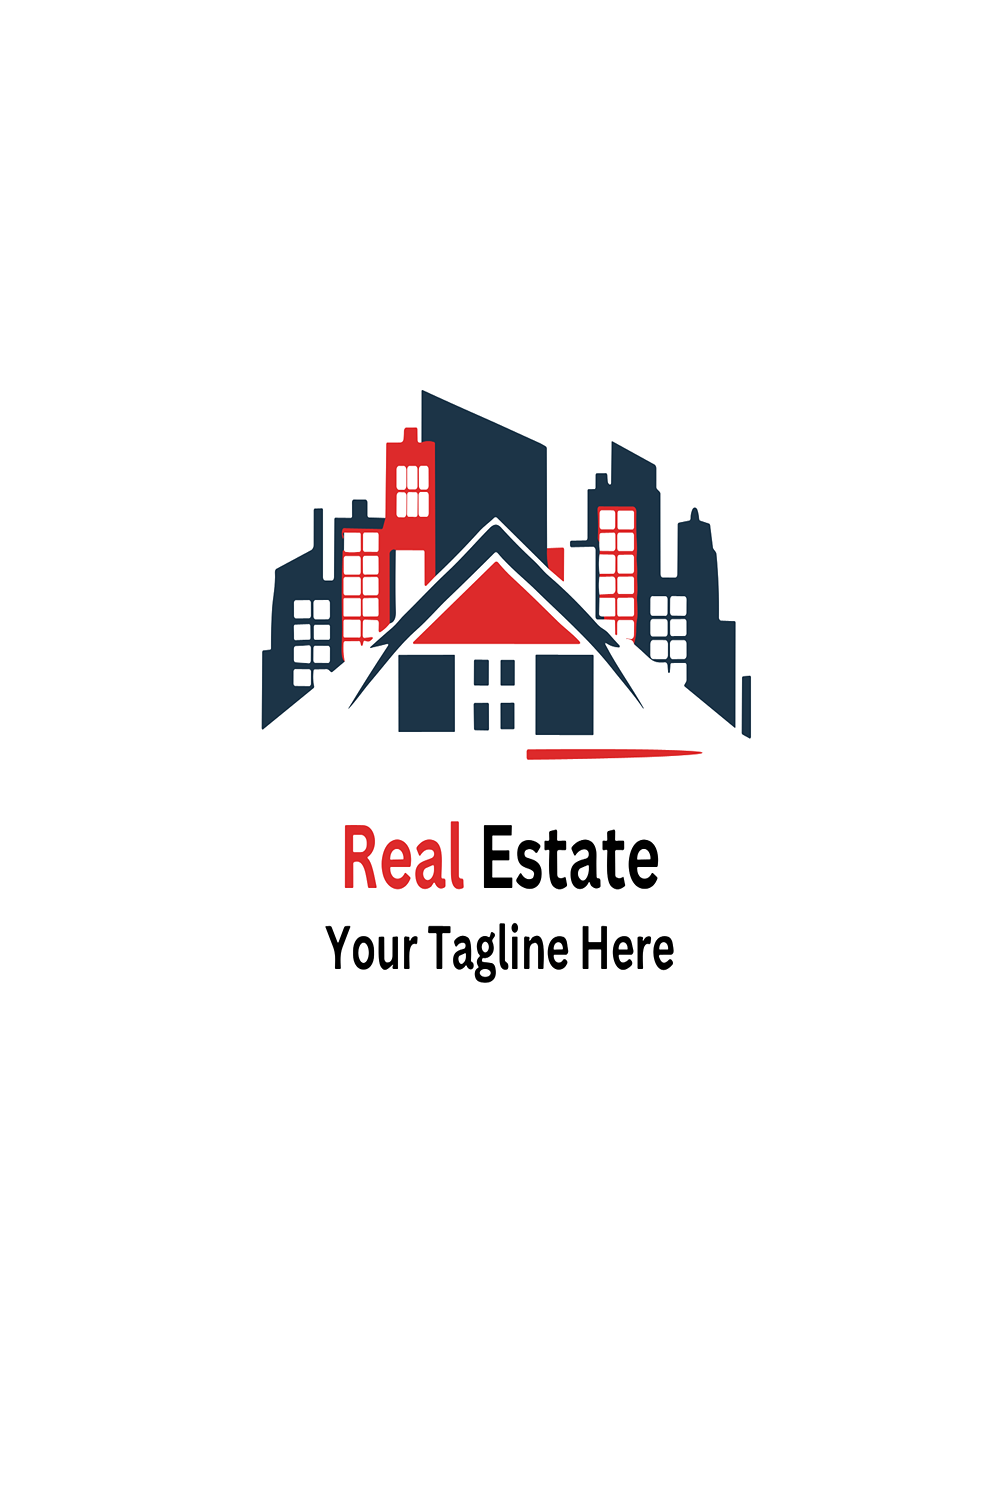 Real Estate - Logo Design Template, Vector Real Estate Logo, Business Real Estate Logo, Company Real Estate Logo, Real Estate Logo, pinterest preview image.